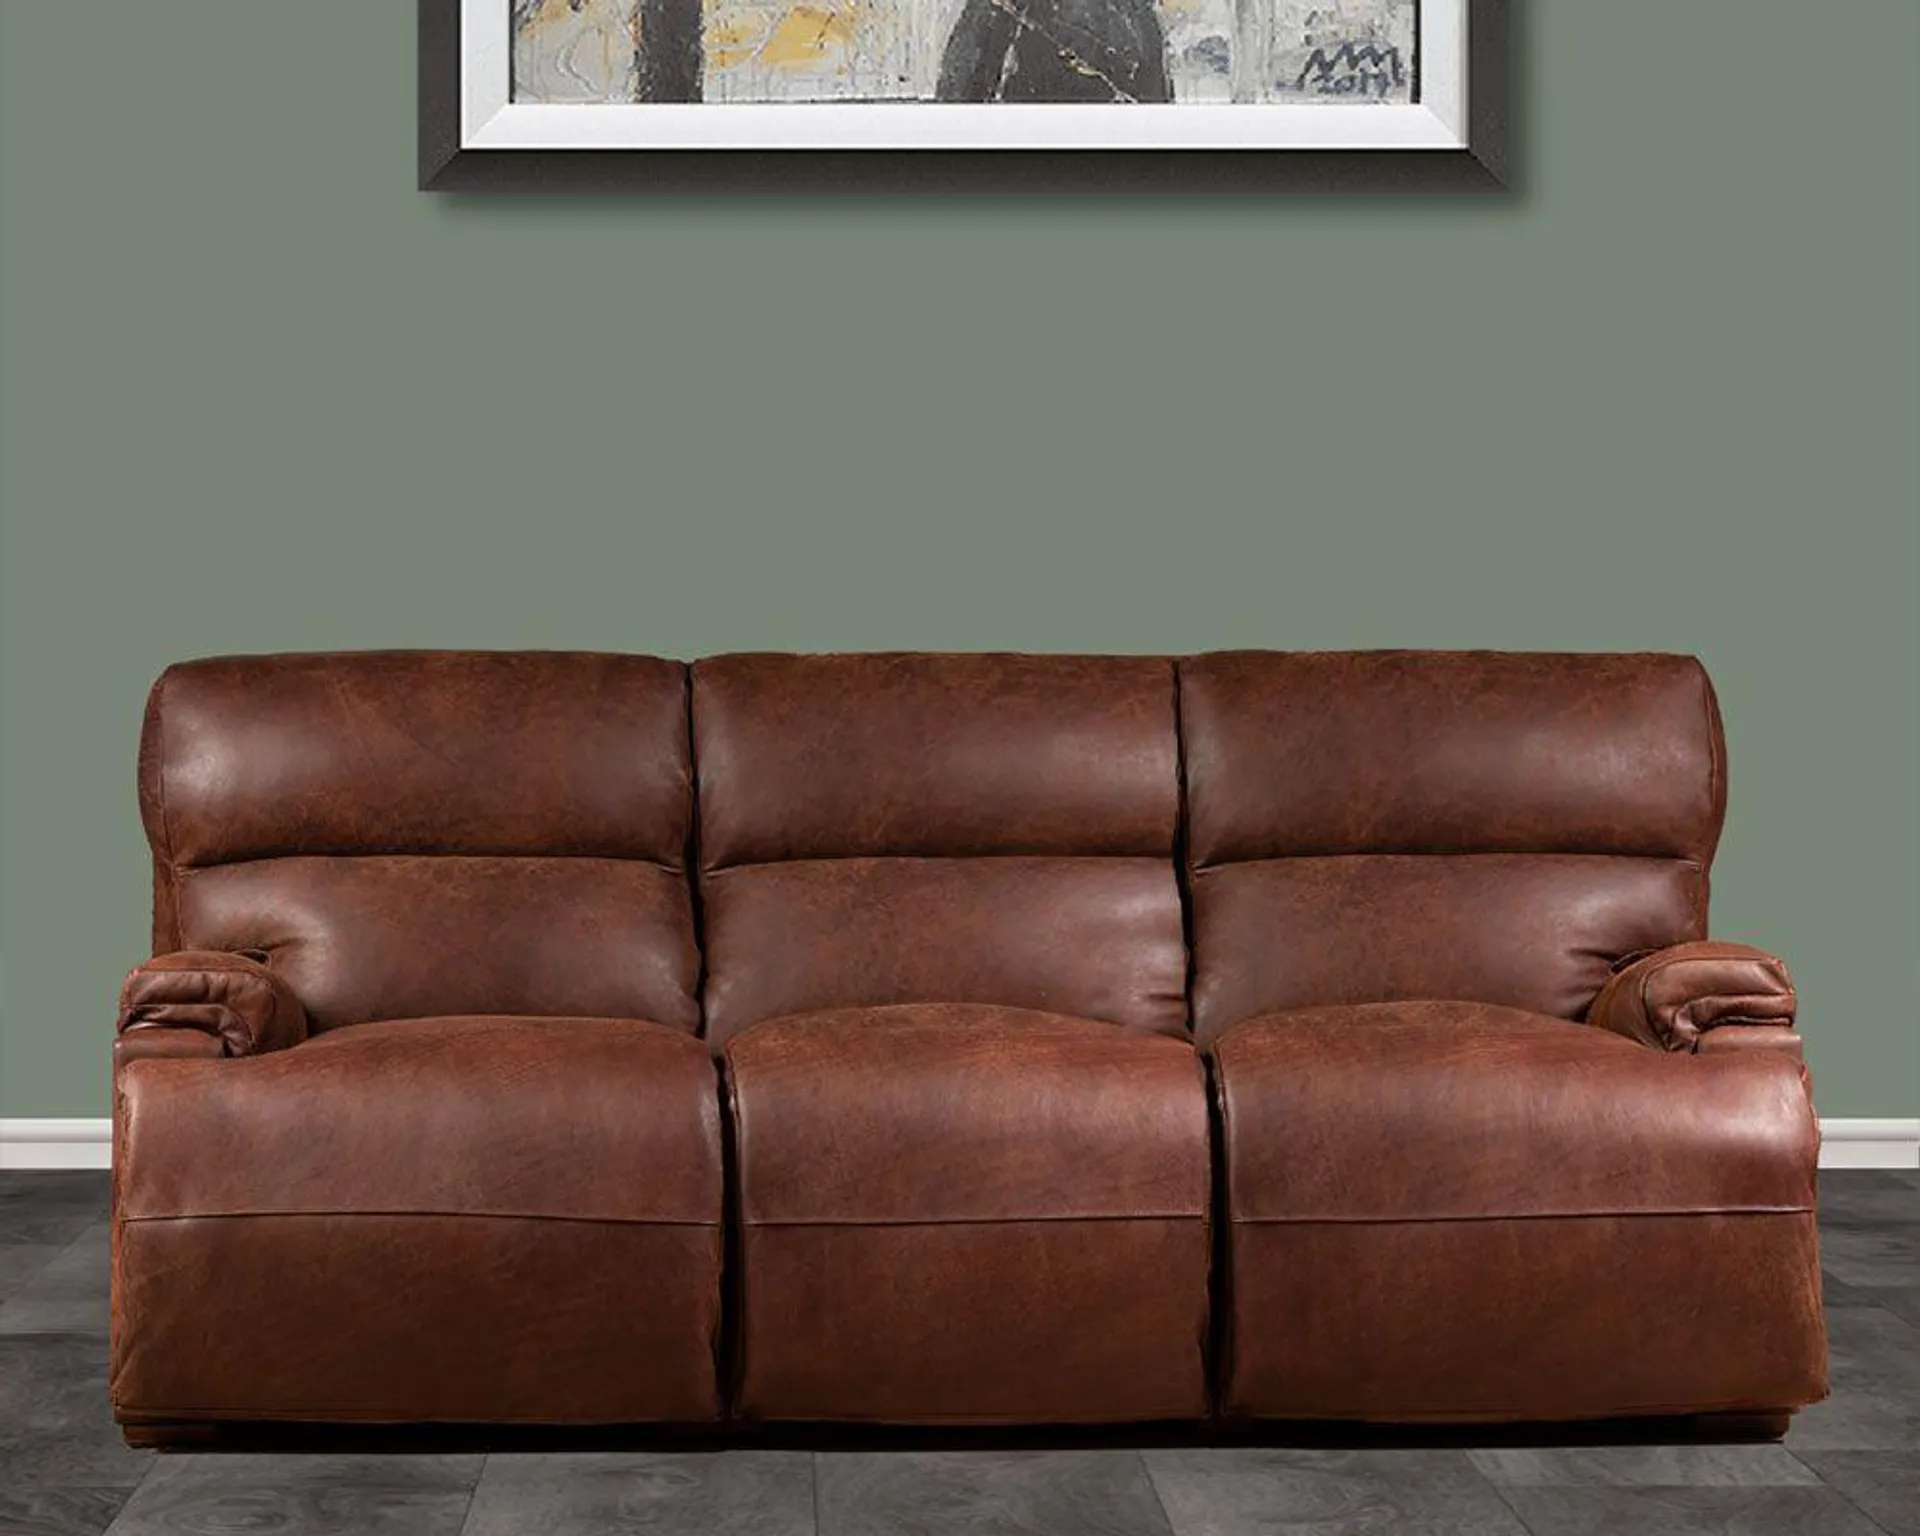 Easyliner recliner couch – 3 Divison